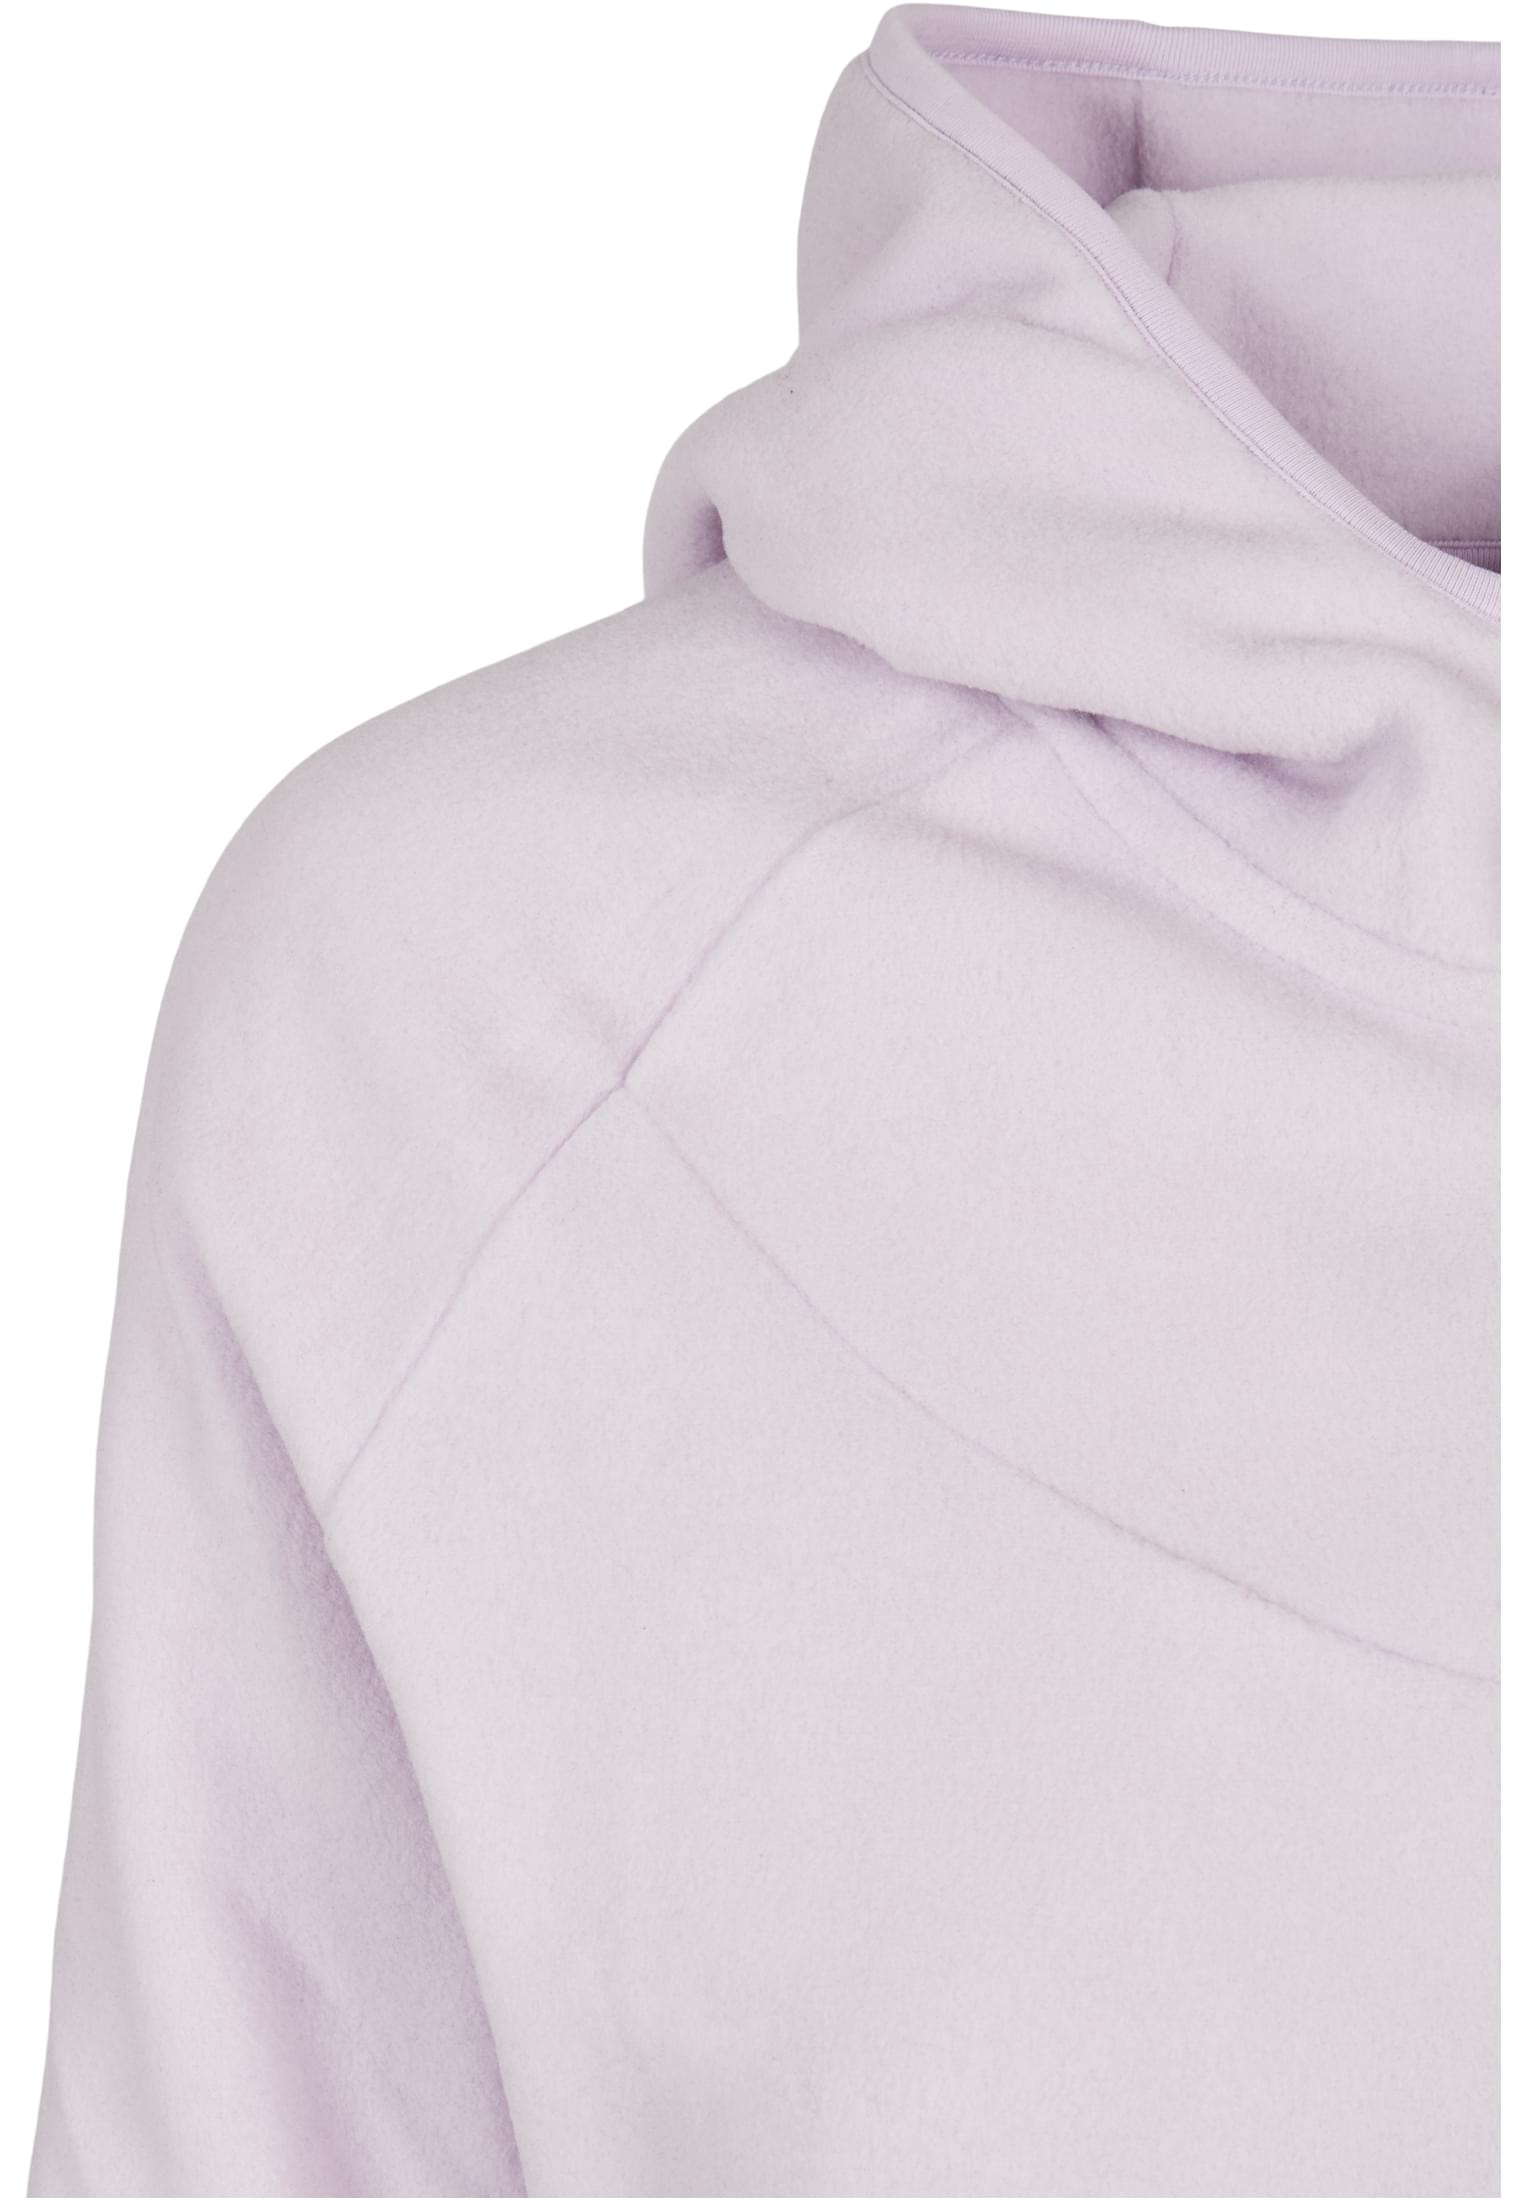 Damen Ladies Polar Fleece Zip Hoody in Farbe softlilac